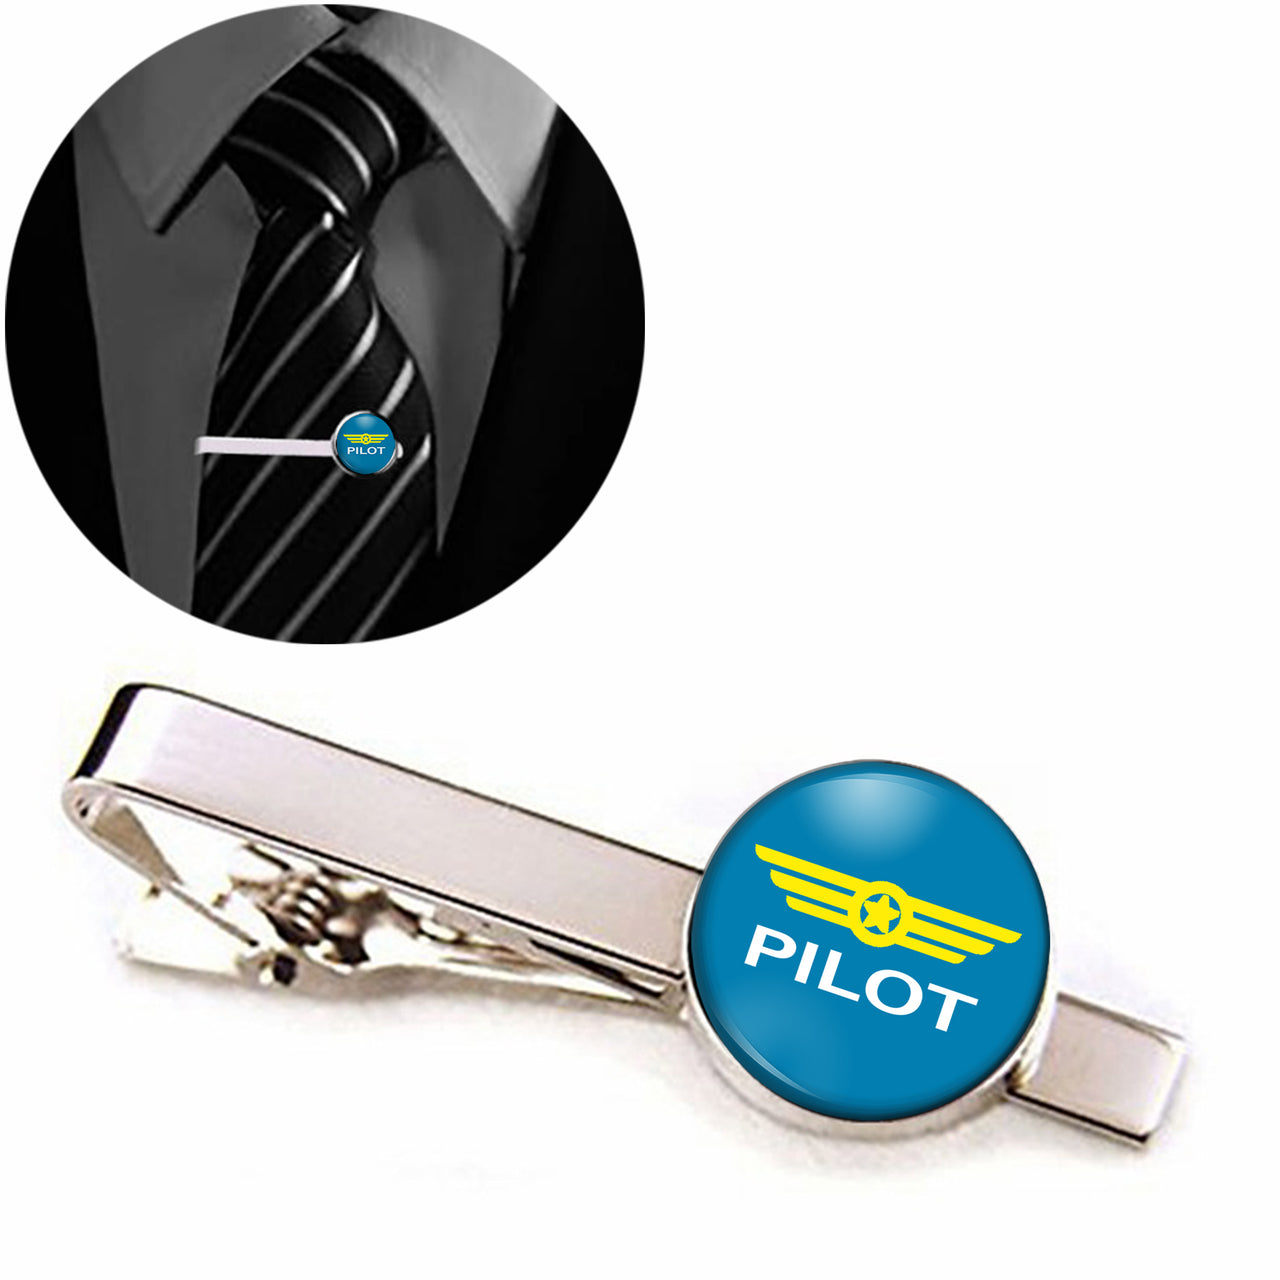 Pilot & Badge Designed Tie Clips